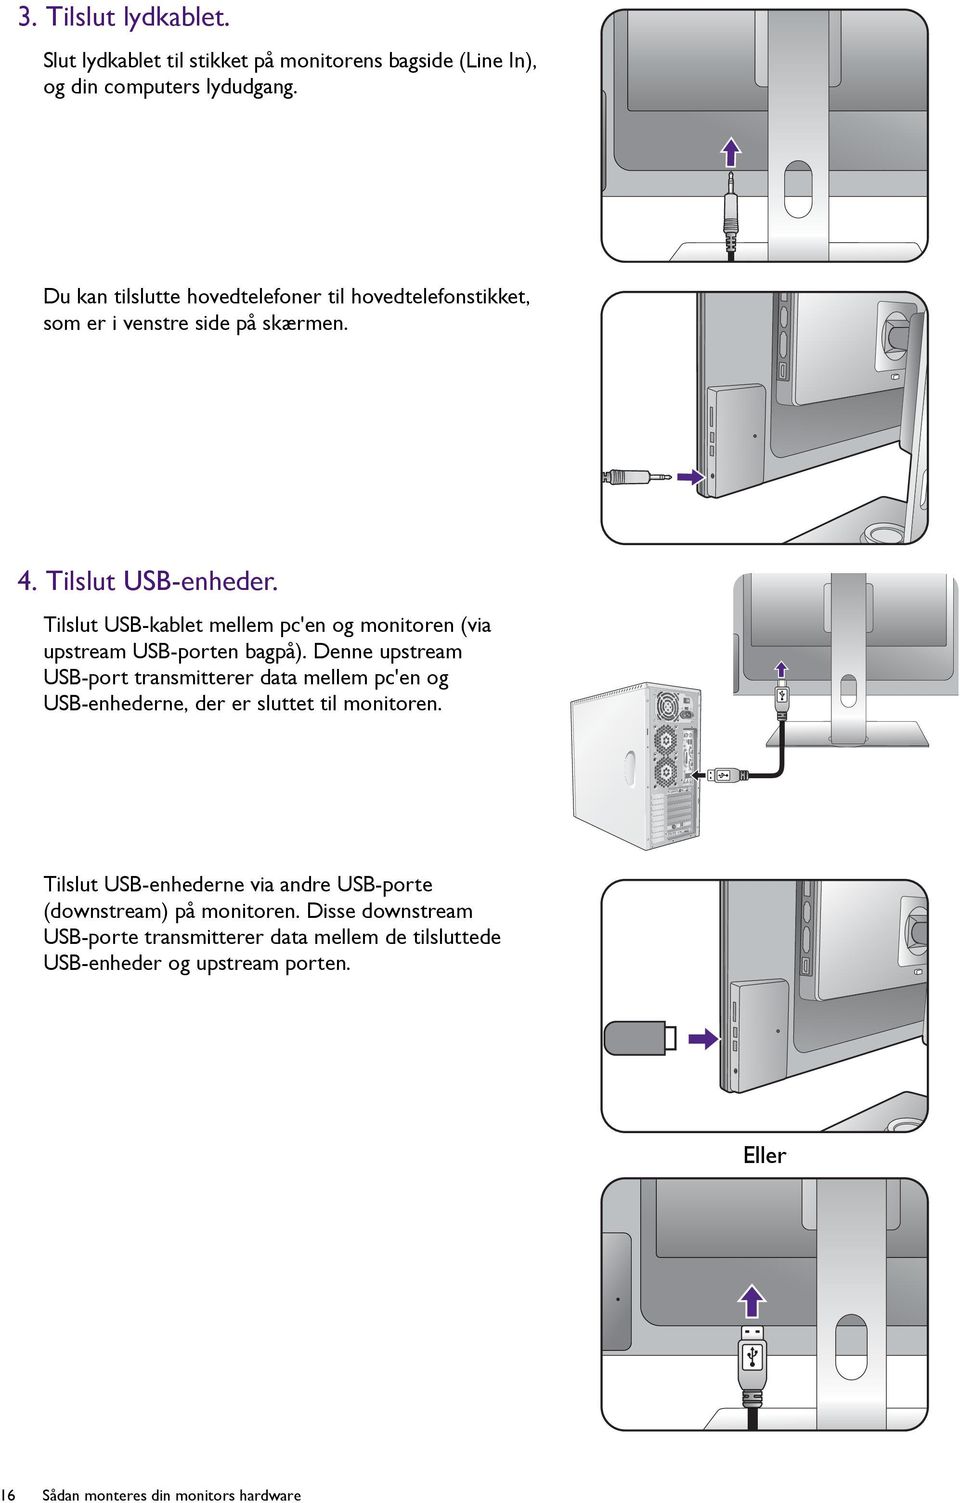 Tilslut USB-kablet mellem pc'en og monitoren (via upstream USB-porten bagpå).